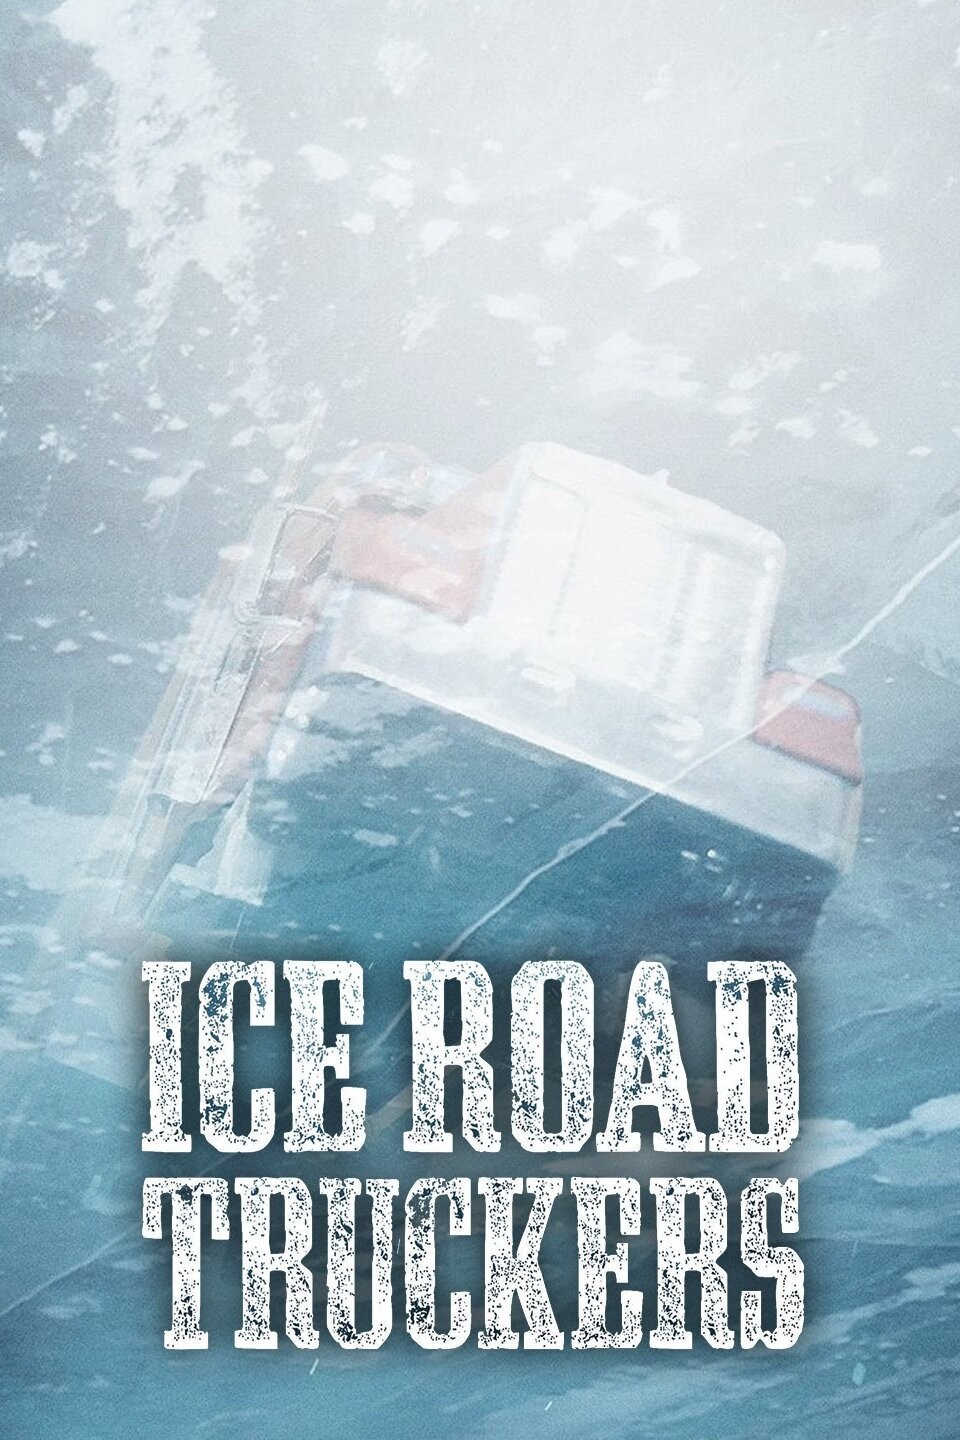 Ice Road Truckers Season 1